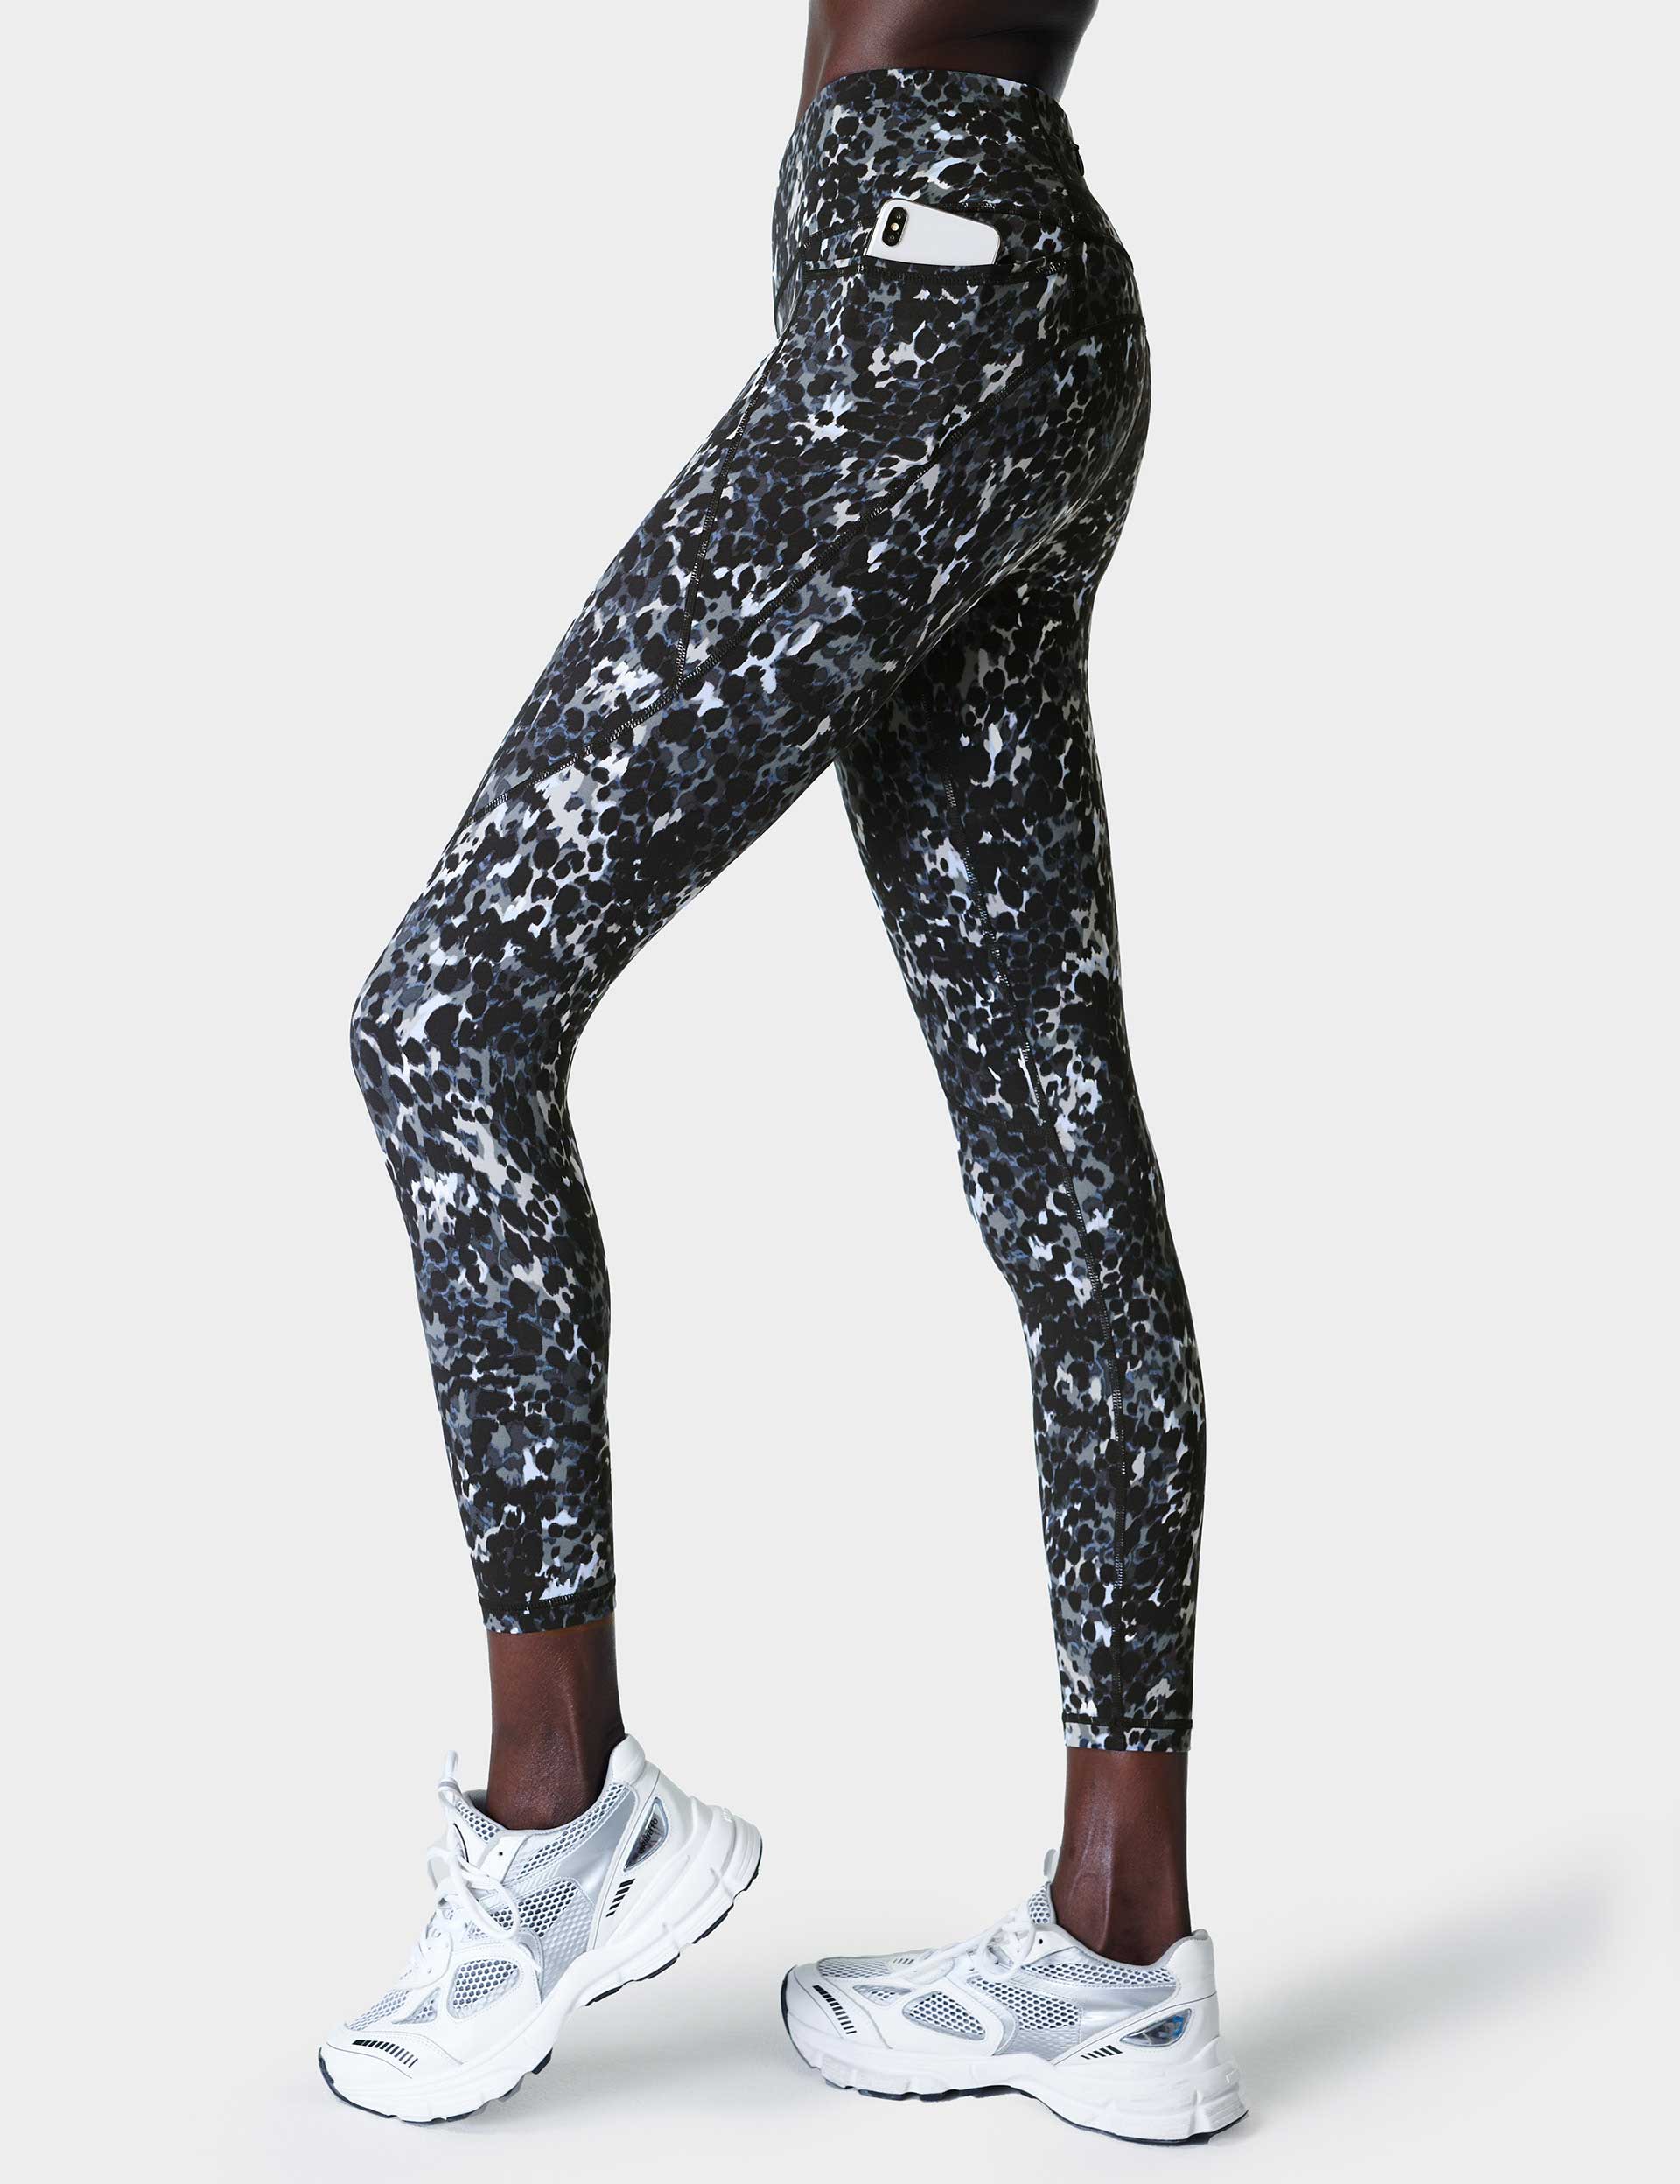 Buy Nike Women's Power Speed Capri Pants Black in KSA -SSS